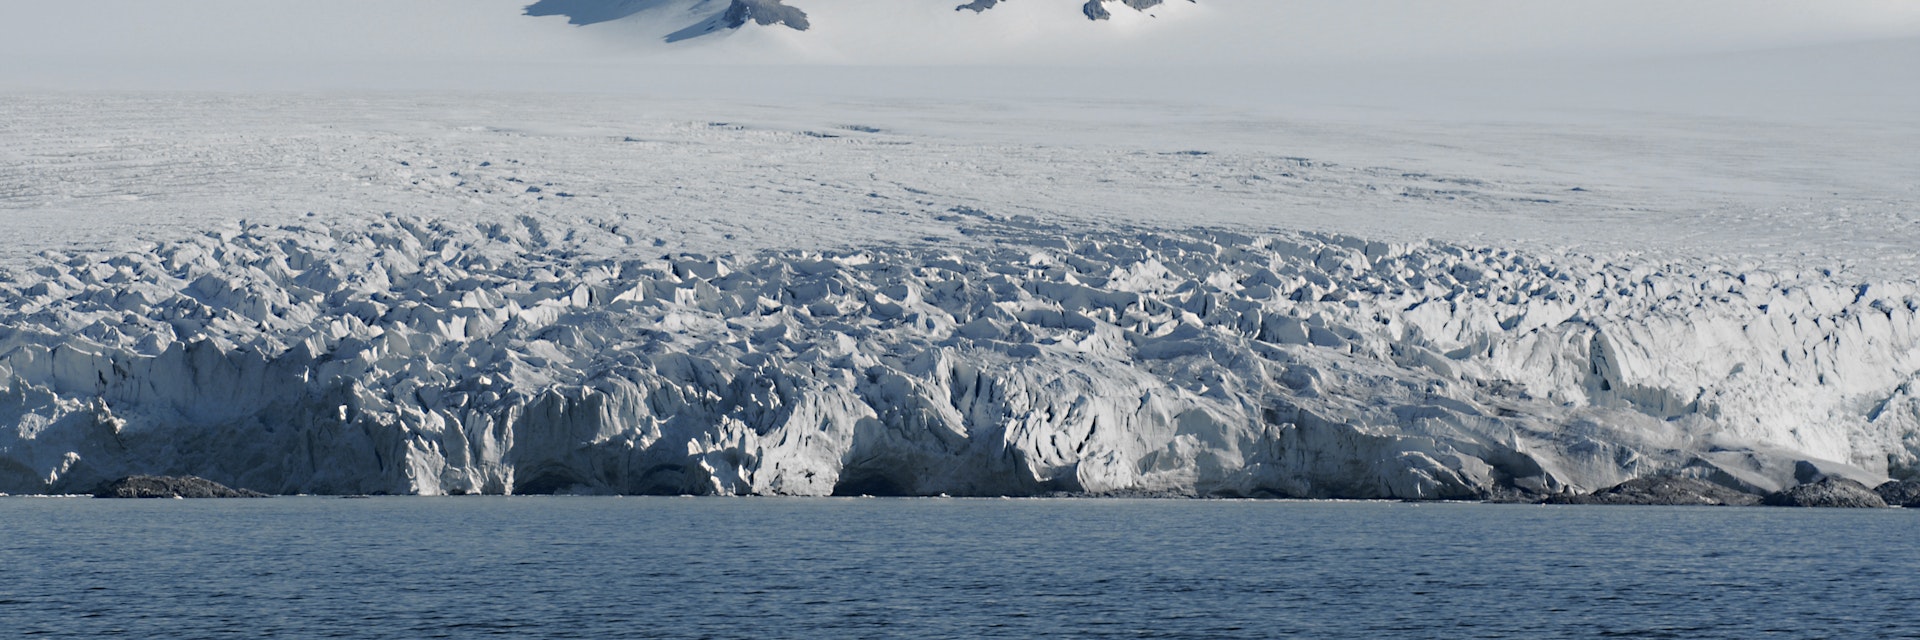 Magdalenefjord in northwestern Spitsbergen. Norway. Europe.; Shutterstock ID 1222385971; your: Sloane Tucker; gl: 65050; netsuite: Online Editorial; full: POI
1222385971